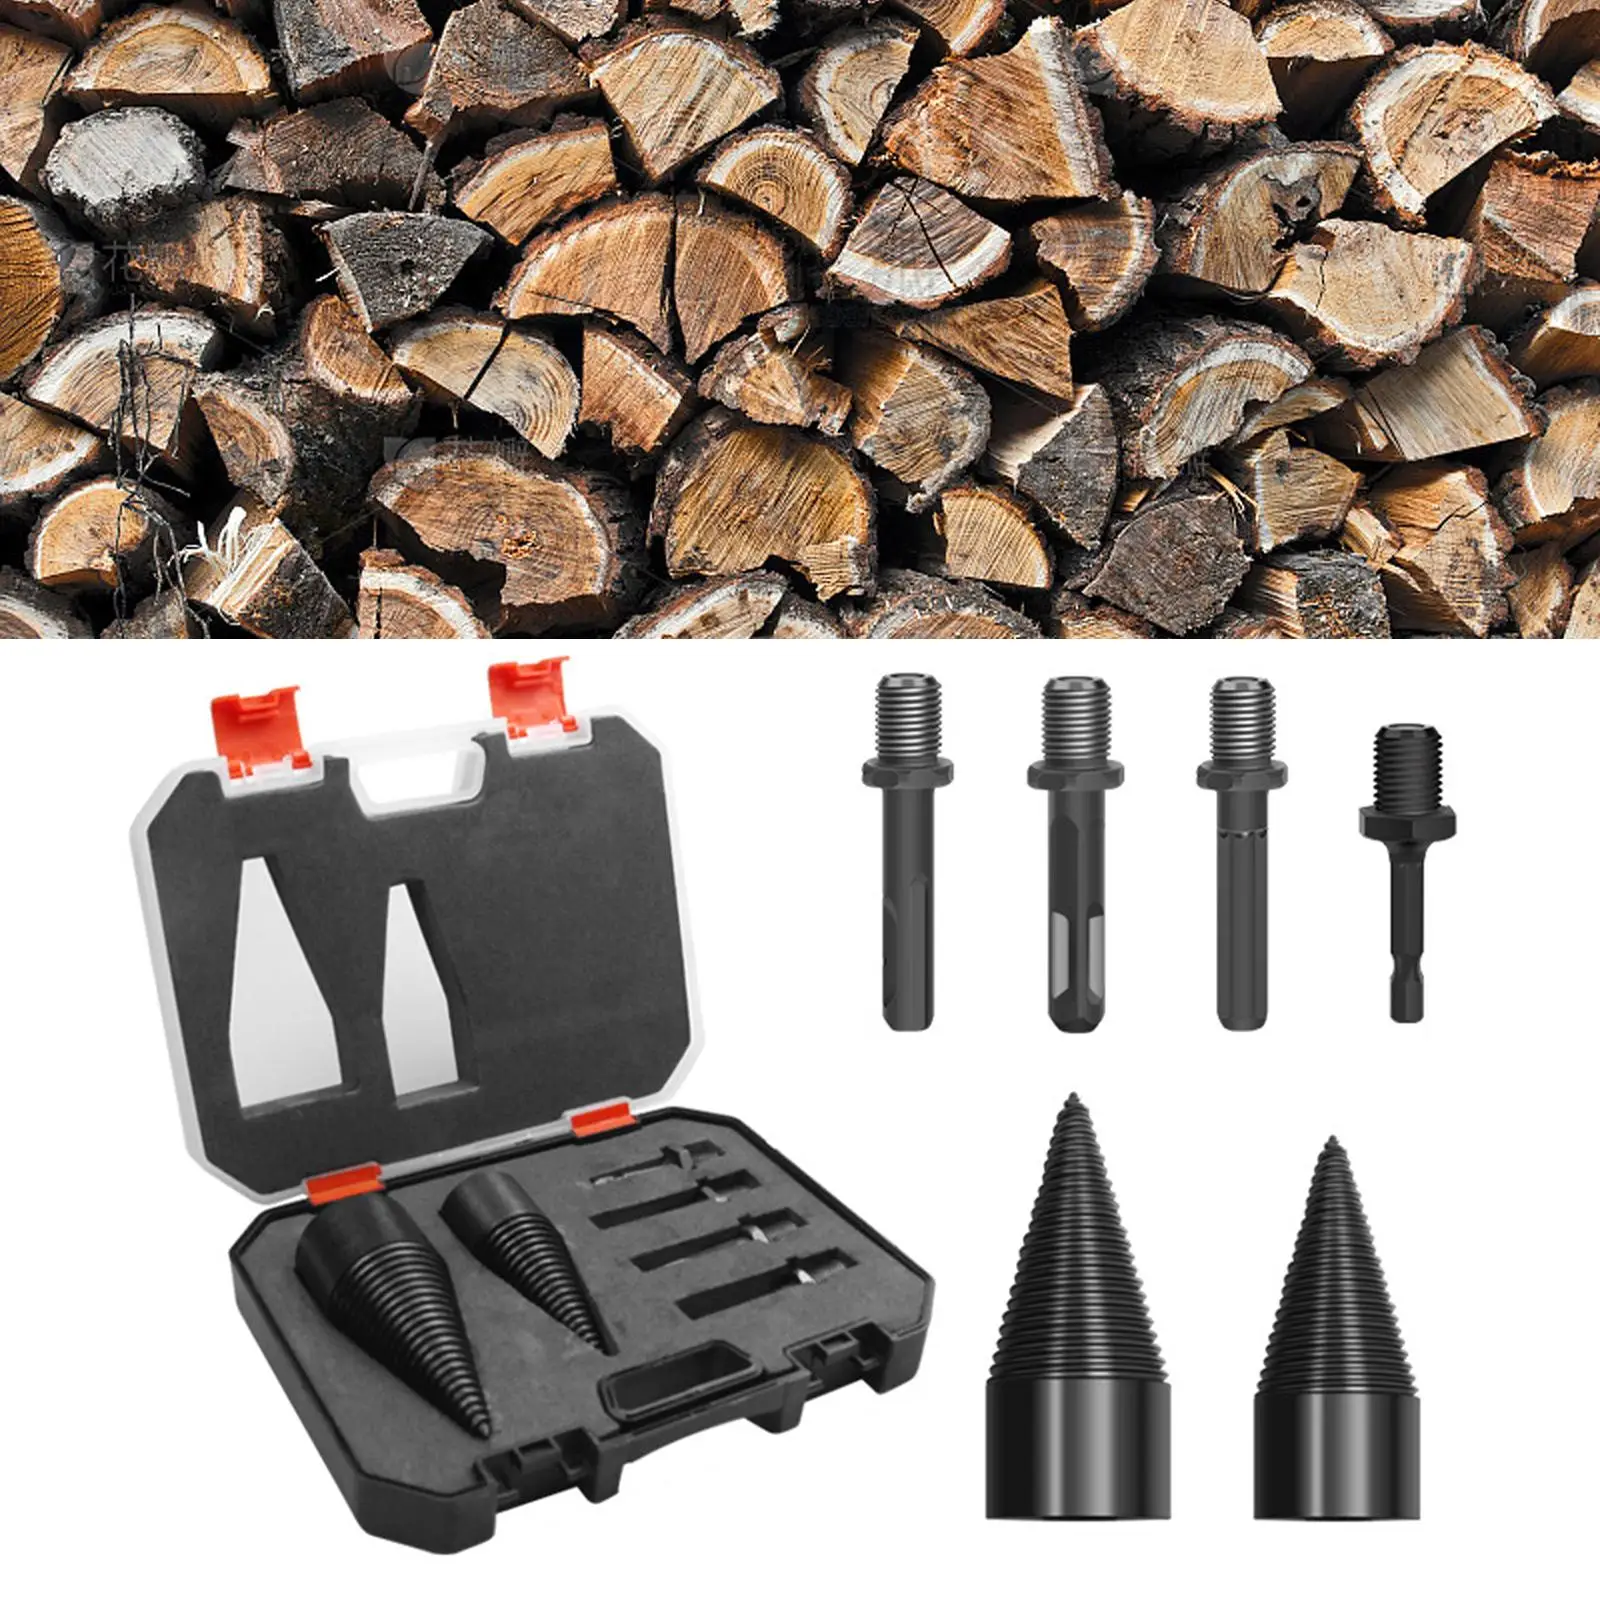 

6Pcs Logs Bits Household with Portable Case Heavy Duty Wood Splitter Screw Splitting Cone Driver Firewood Log Splitter Drill Bit